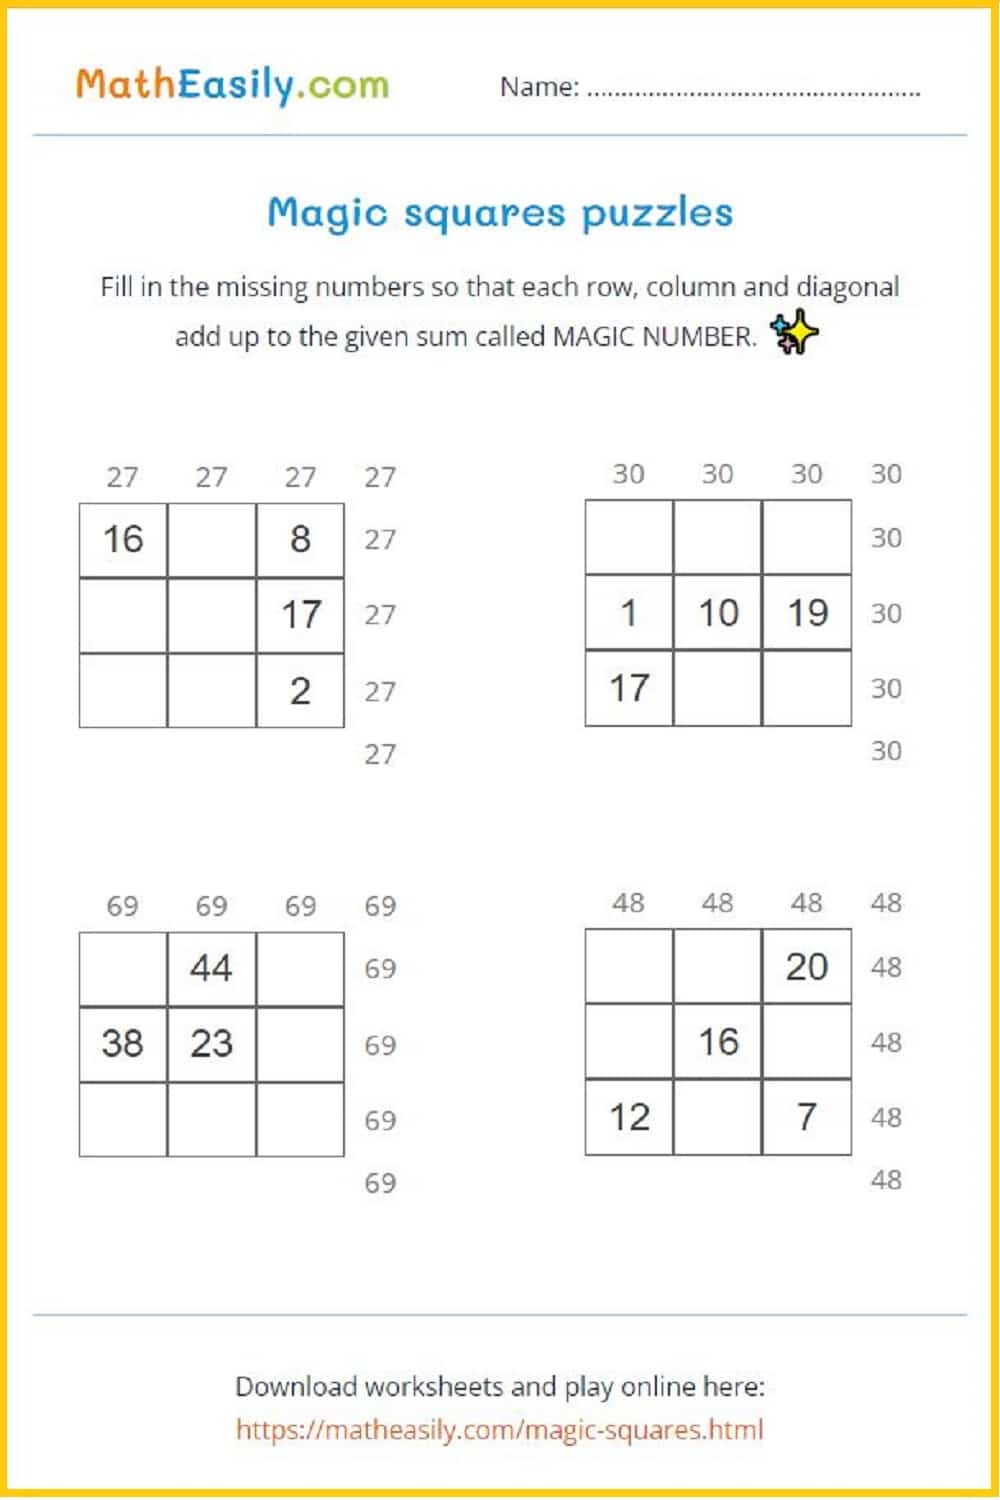 problem solving puzzles printable maths puzzles pdf. printable math puzzles PDF. solve math puzzle online.
kids maths puzzles for kids. Printable math puzzle games.